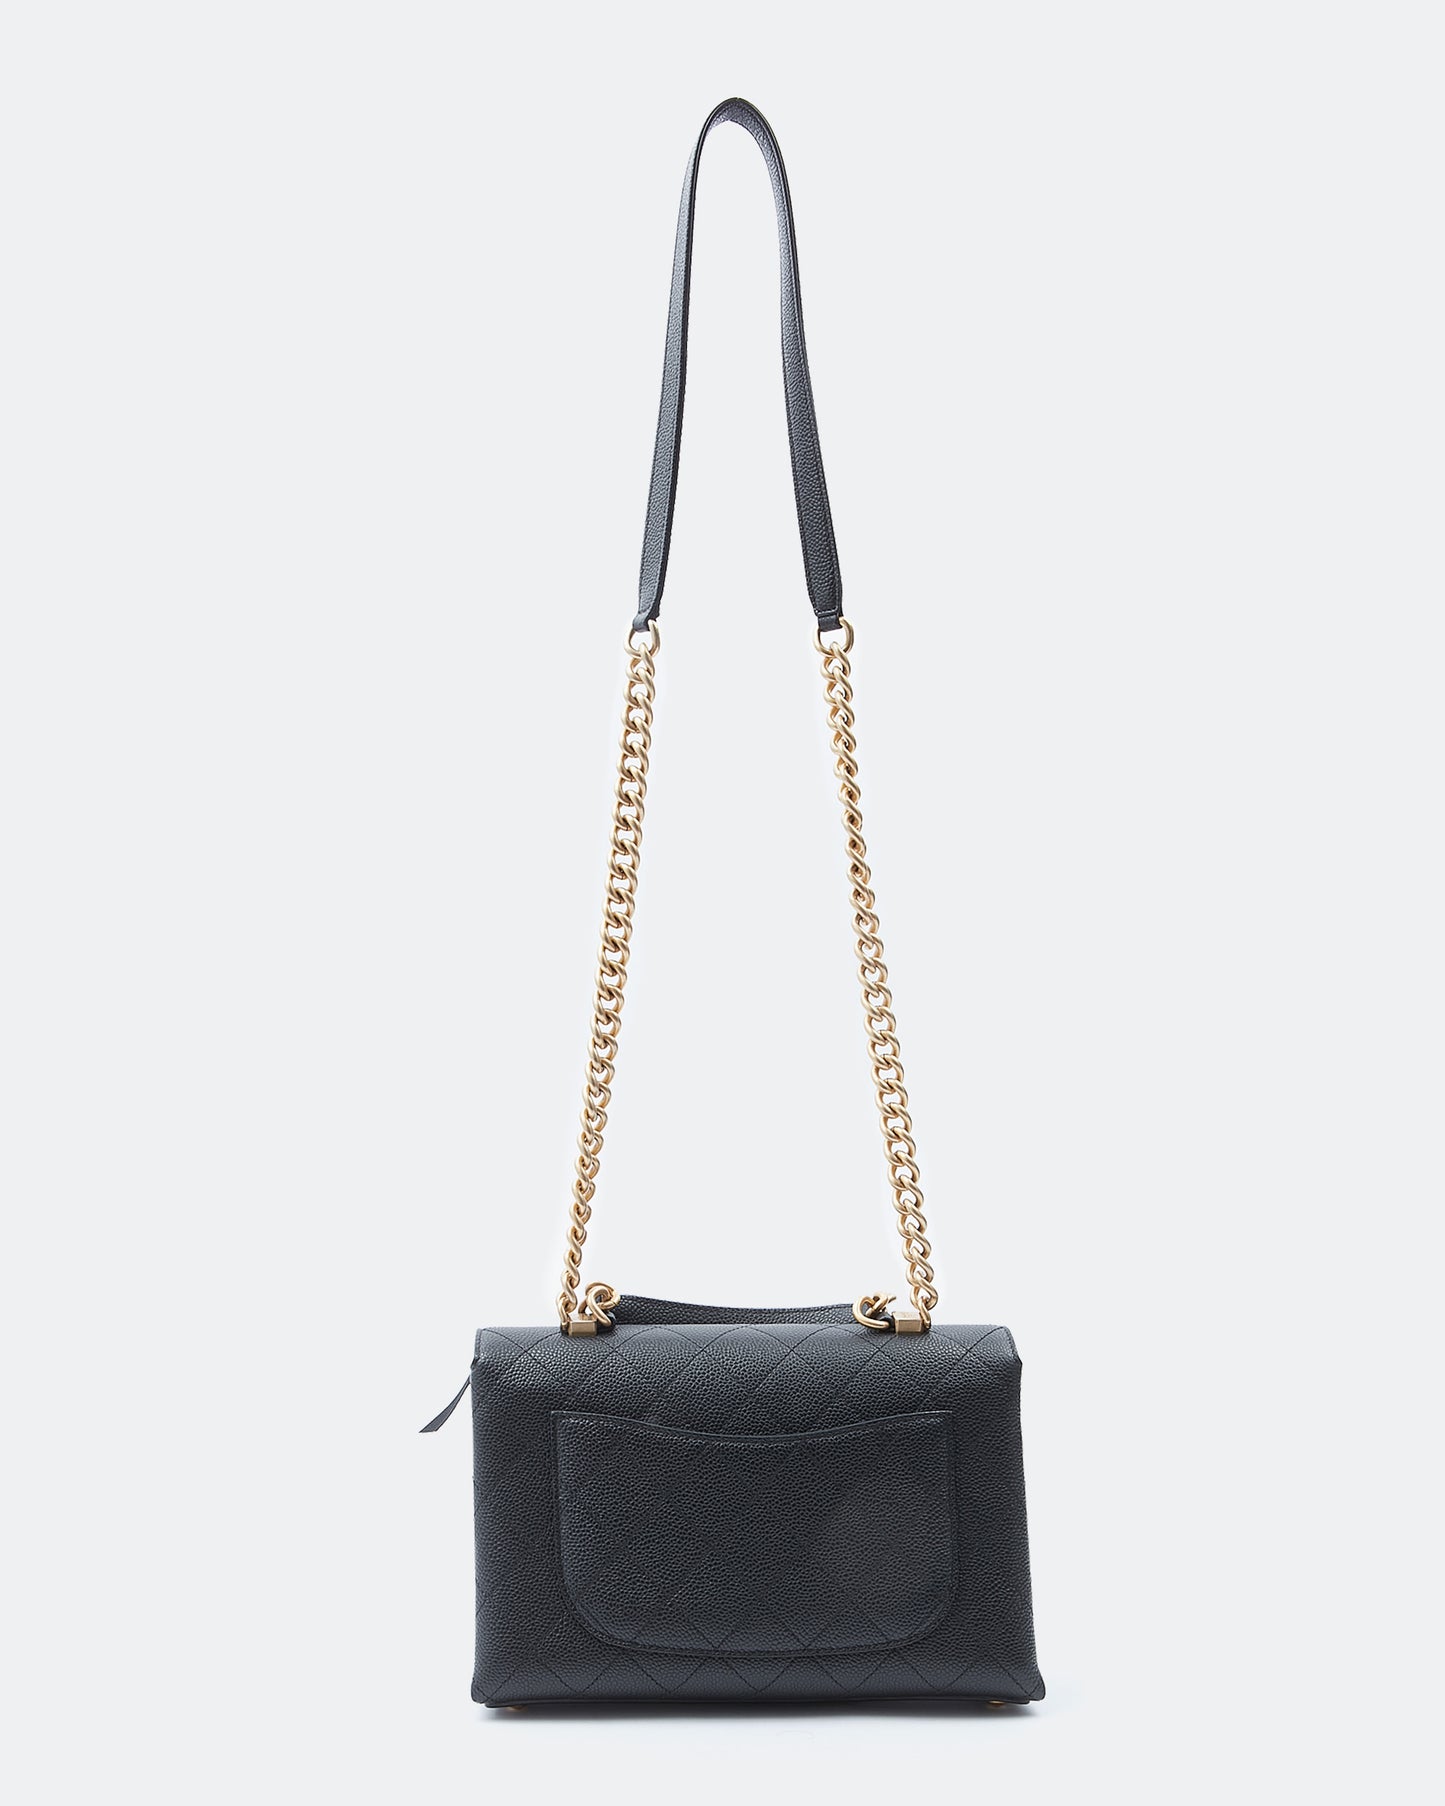 Chanel Black Caviar Chic Medium Top Handle Bag